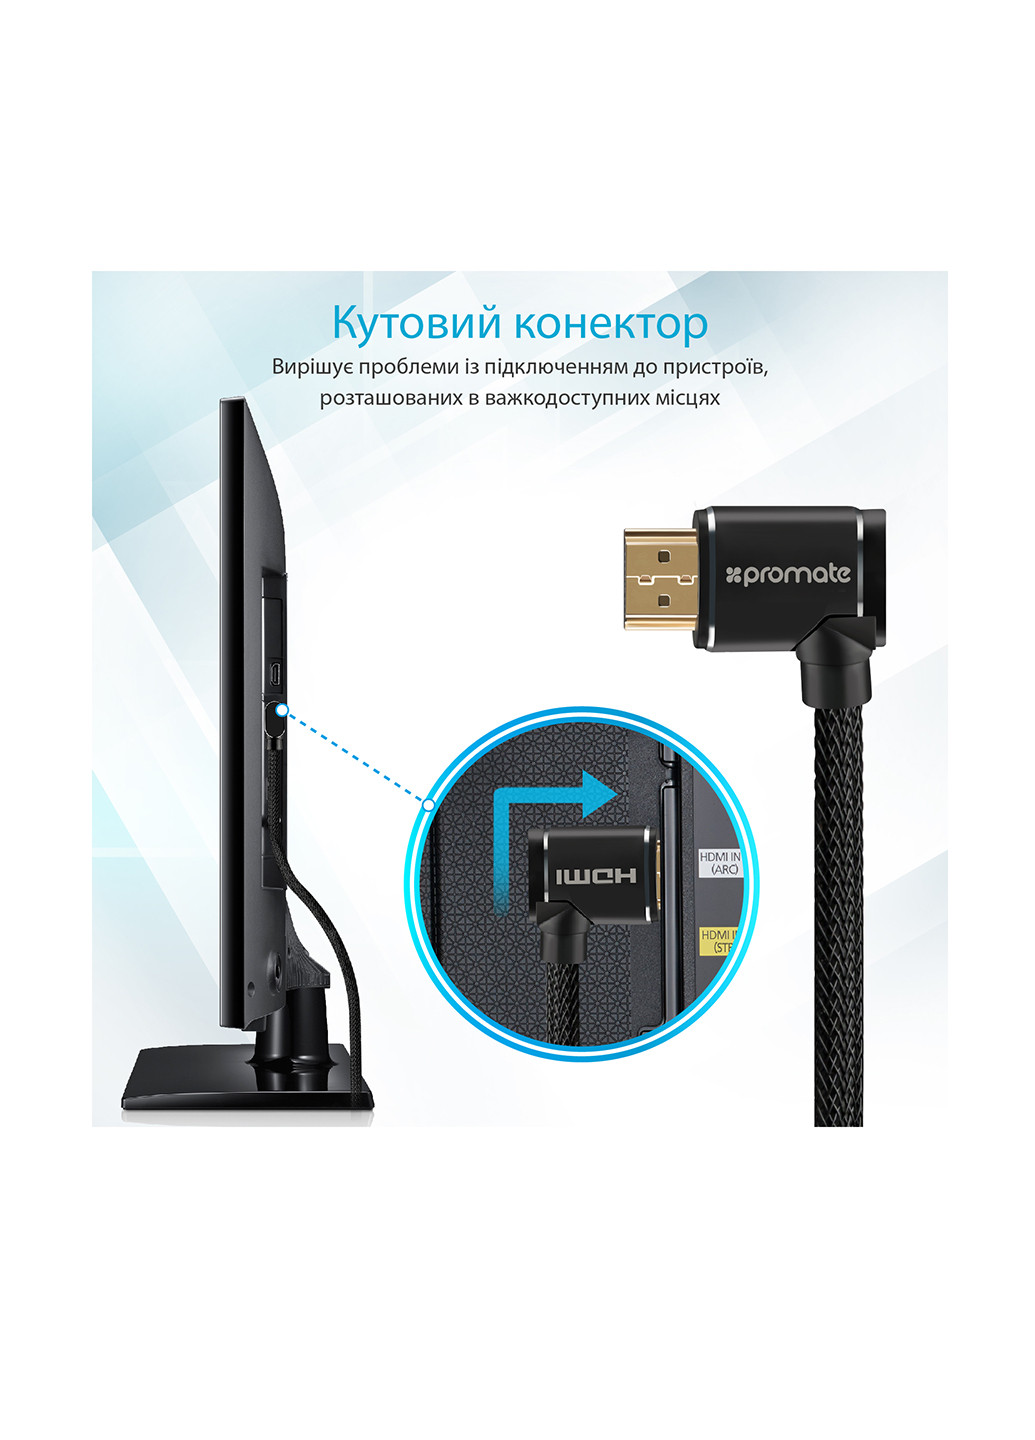 HDMI кабель Black Promate prolink4k1-500 (132703830)